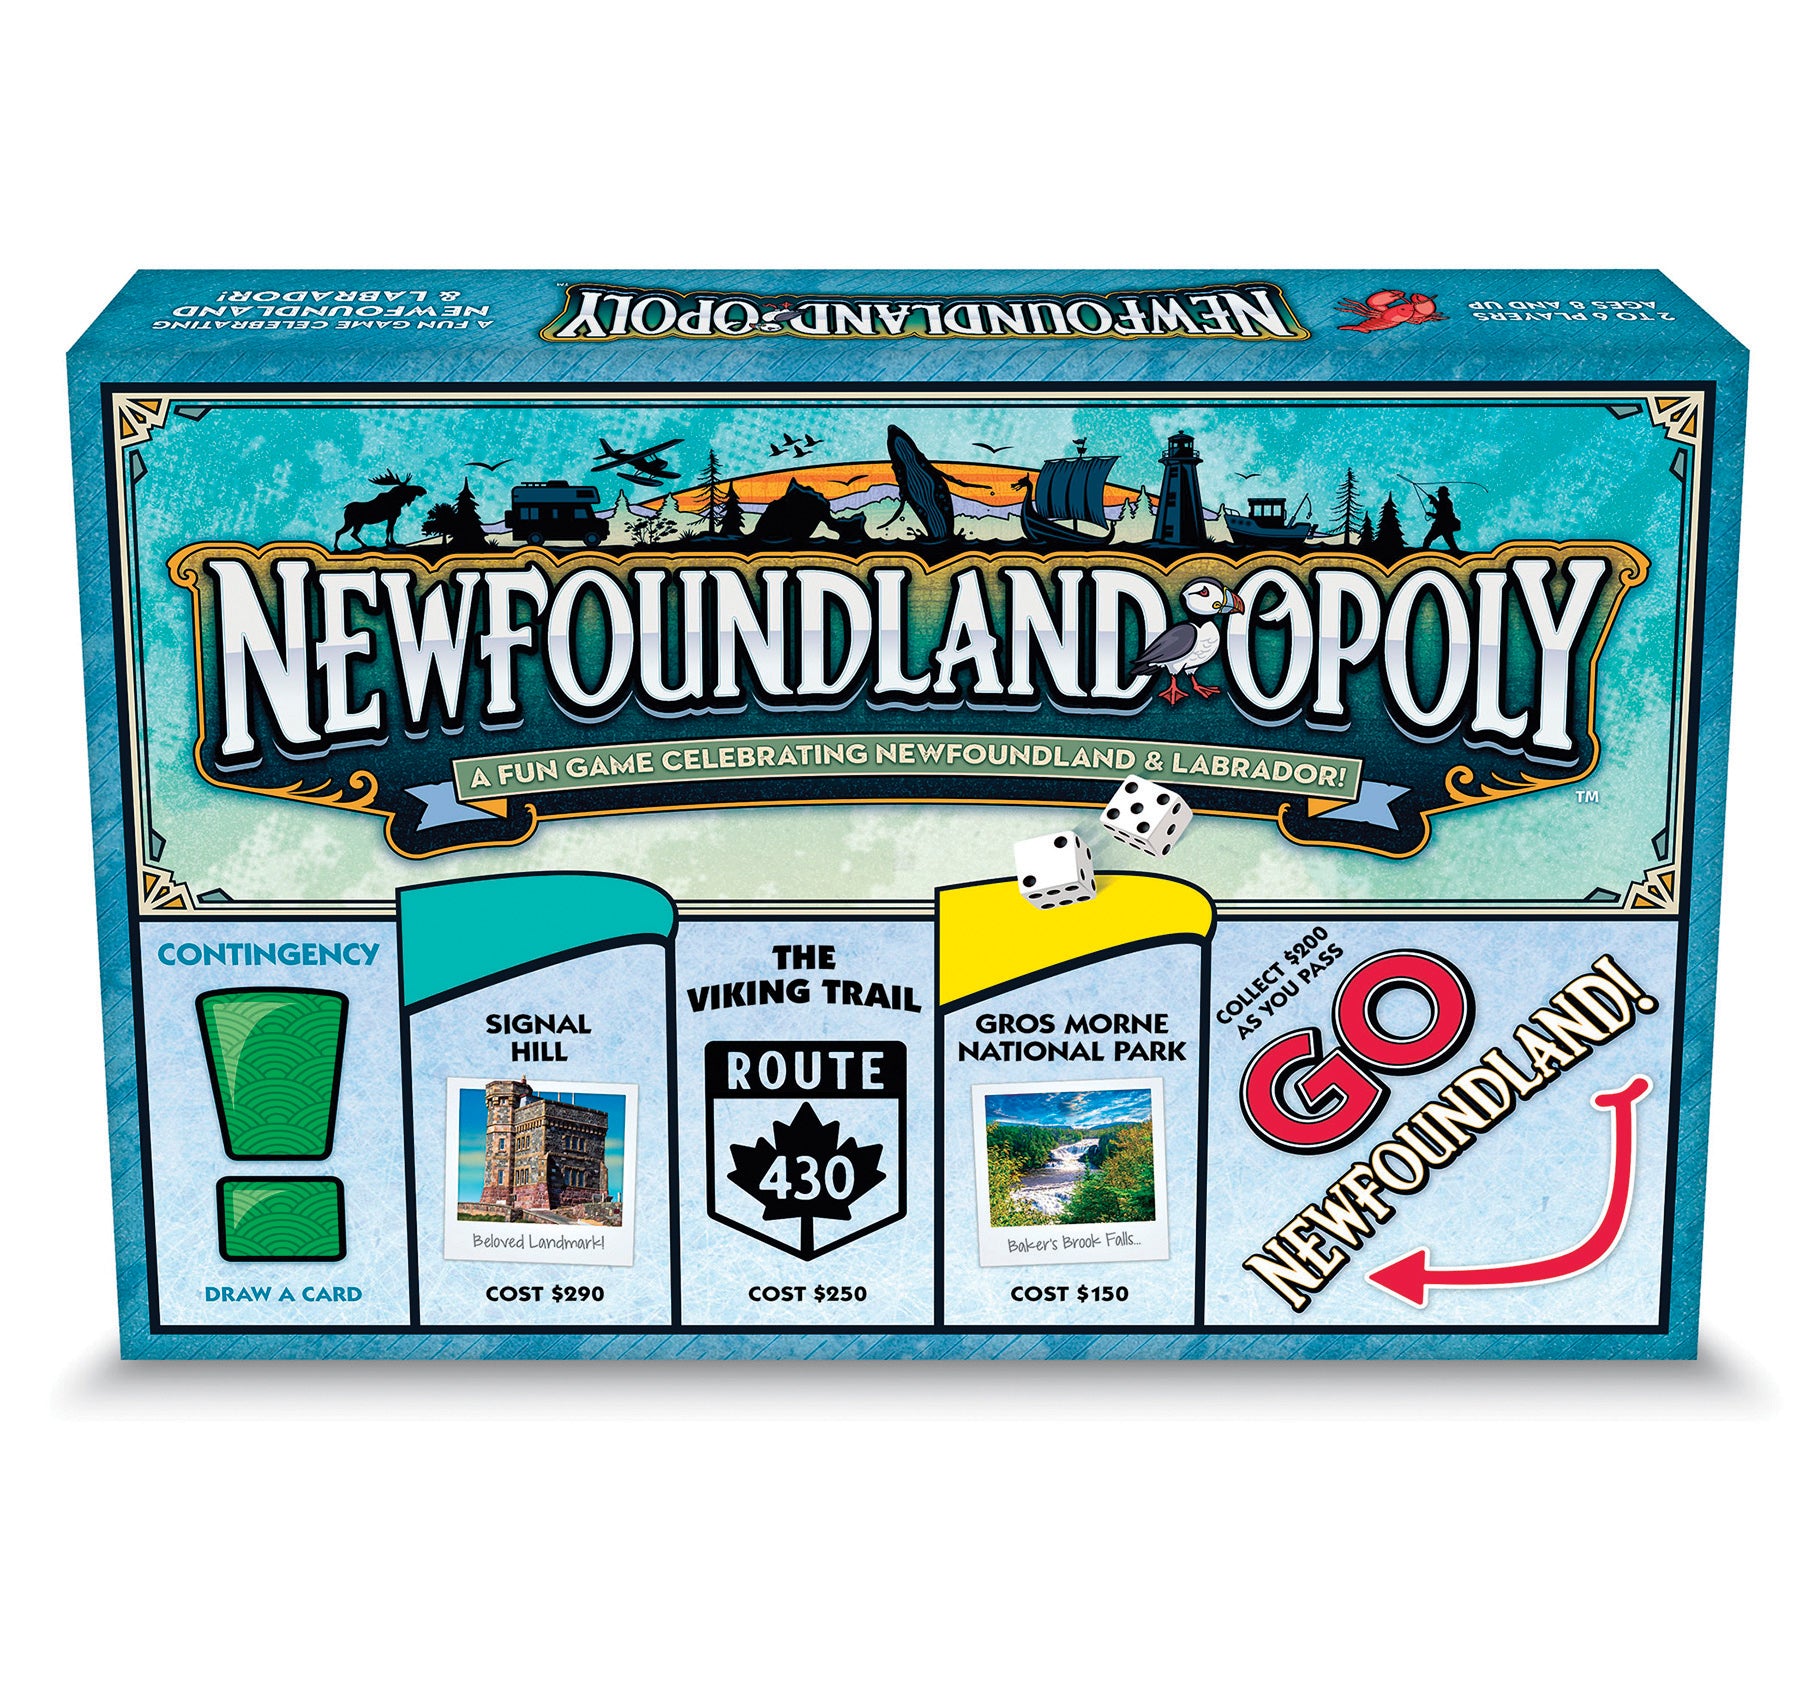 Newfoundland Opoly